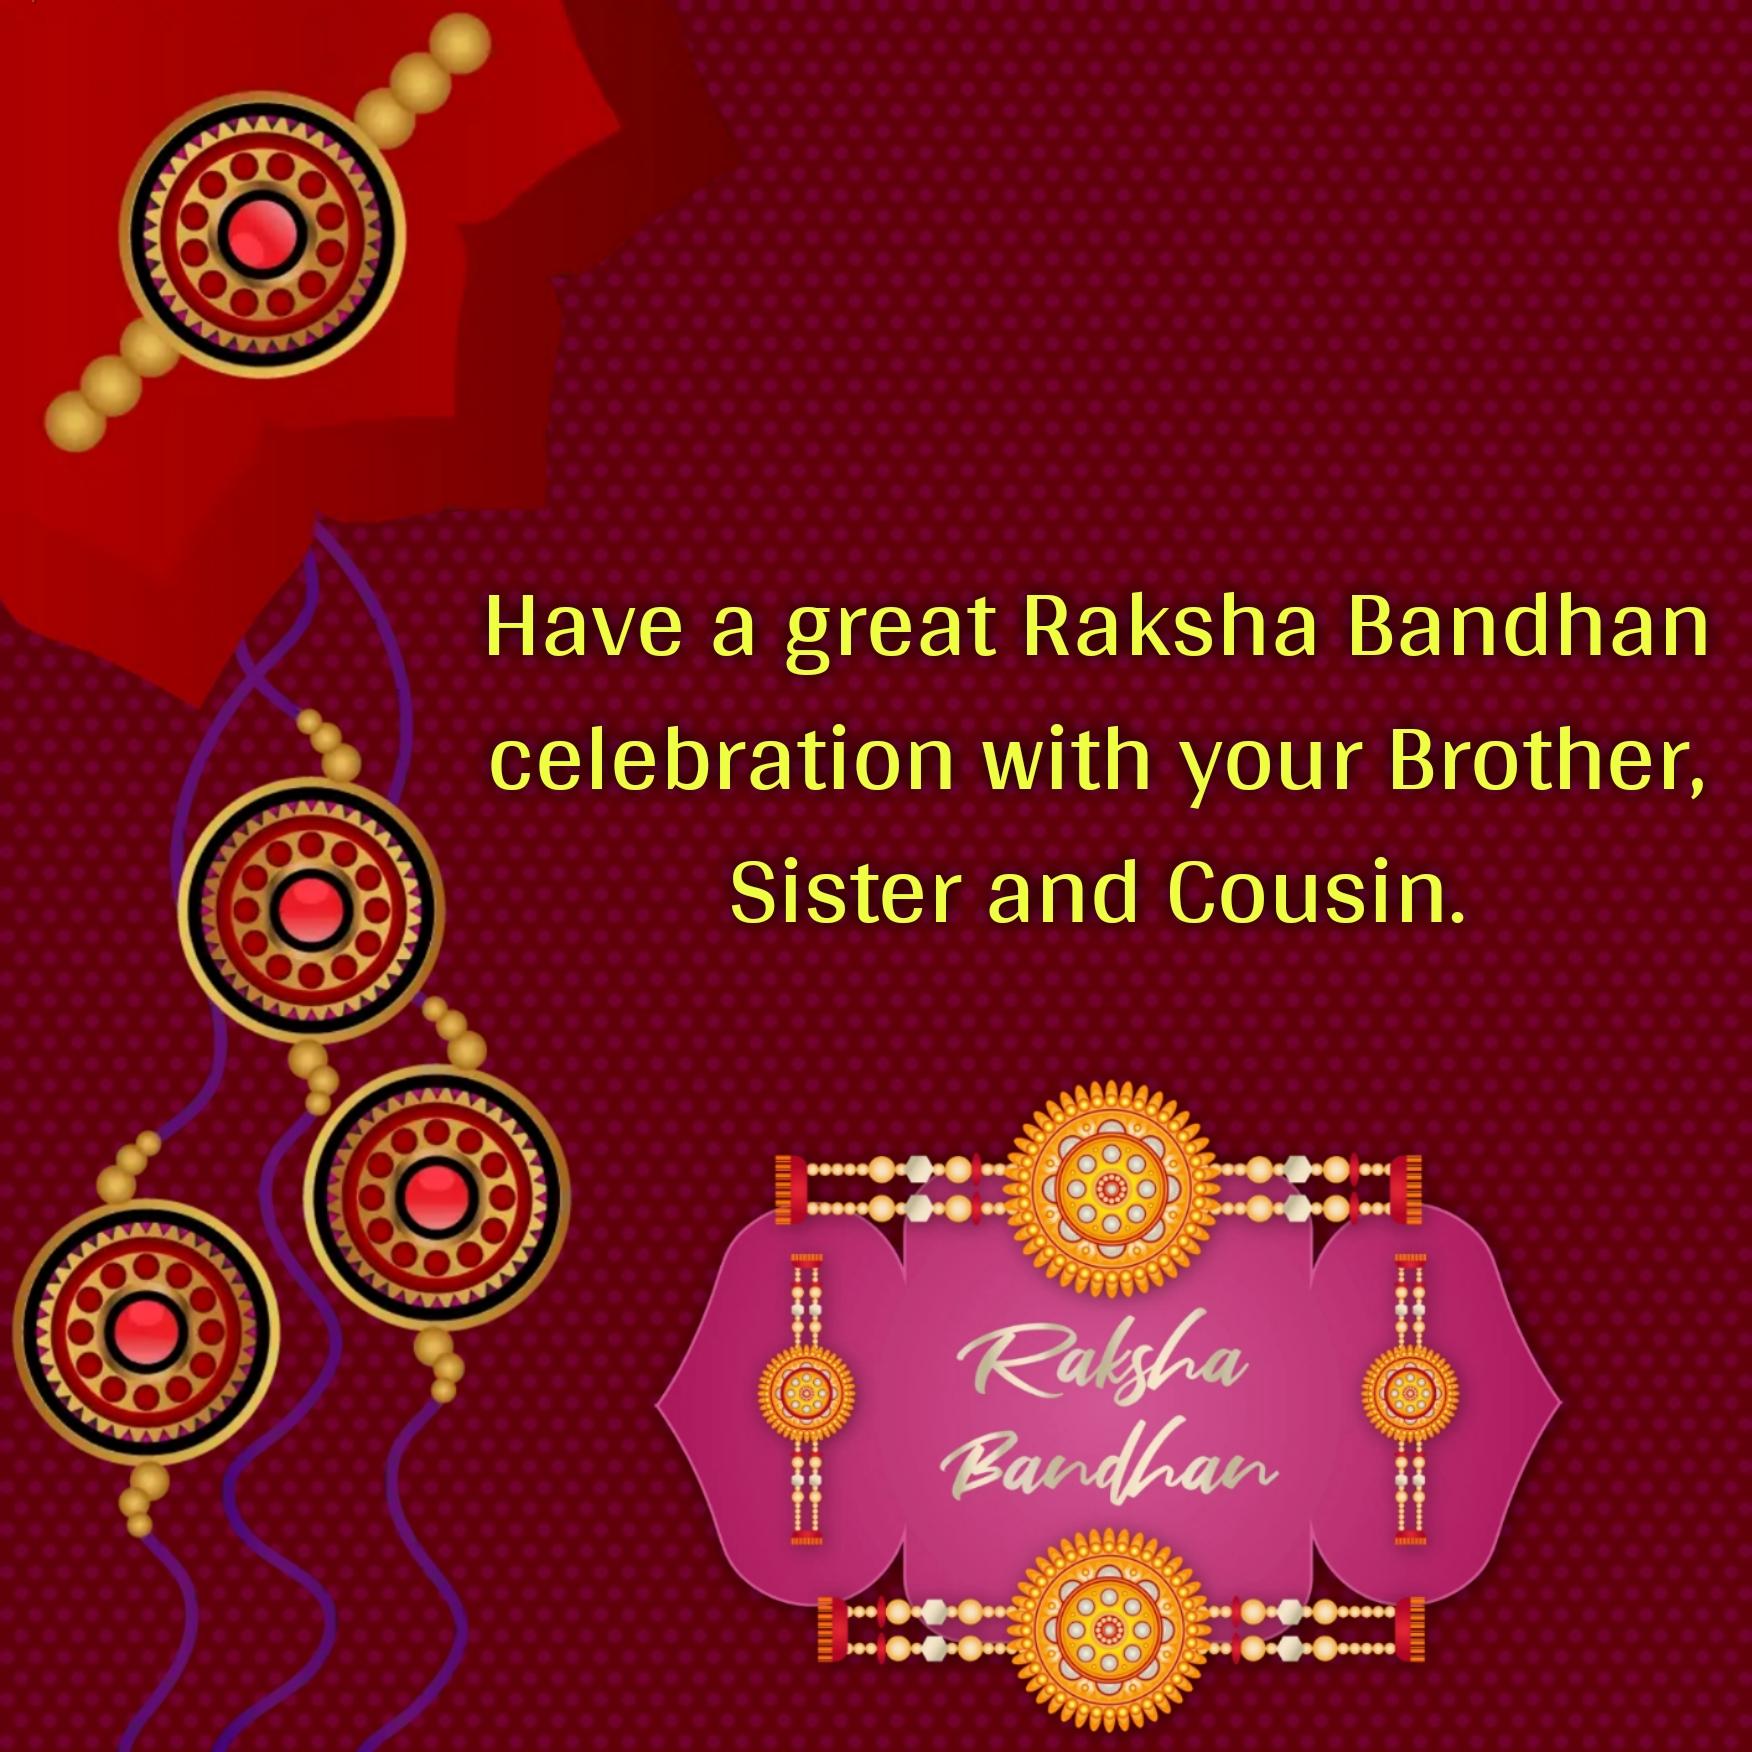 Have a great Raksha Bandhan celebration with your Brother